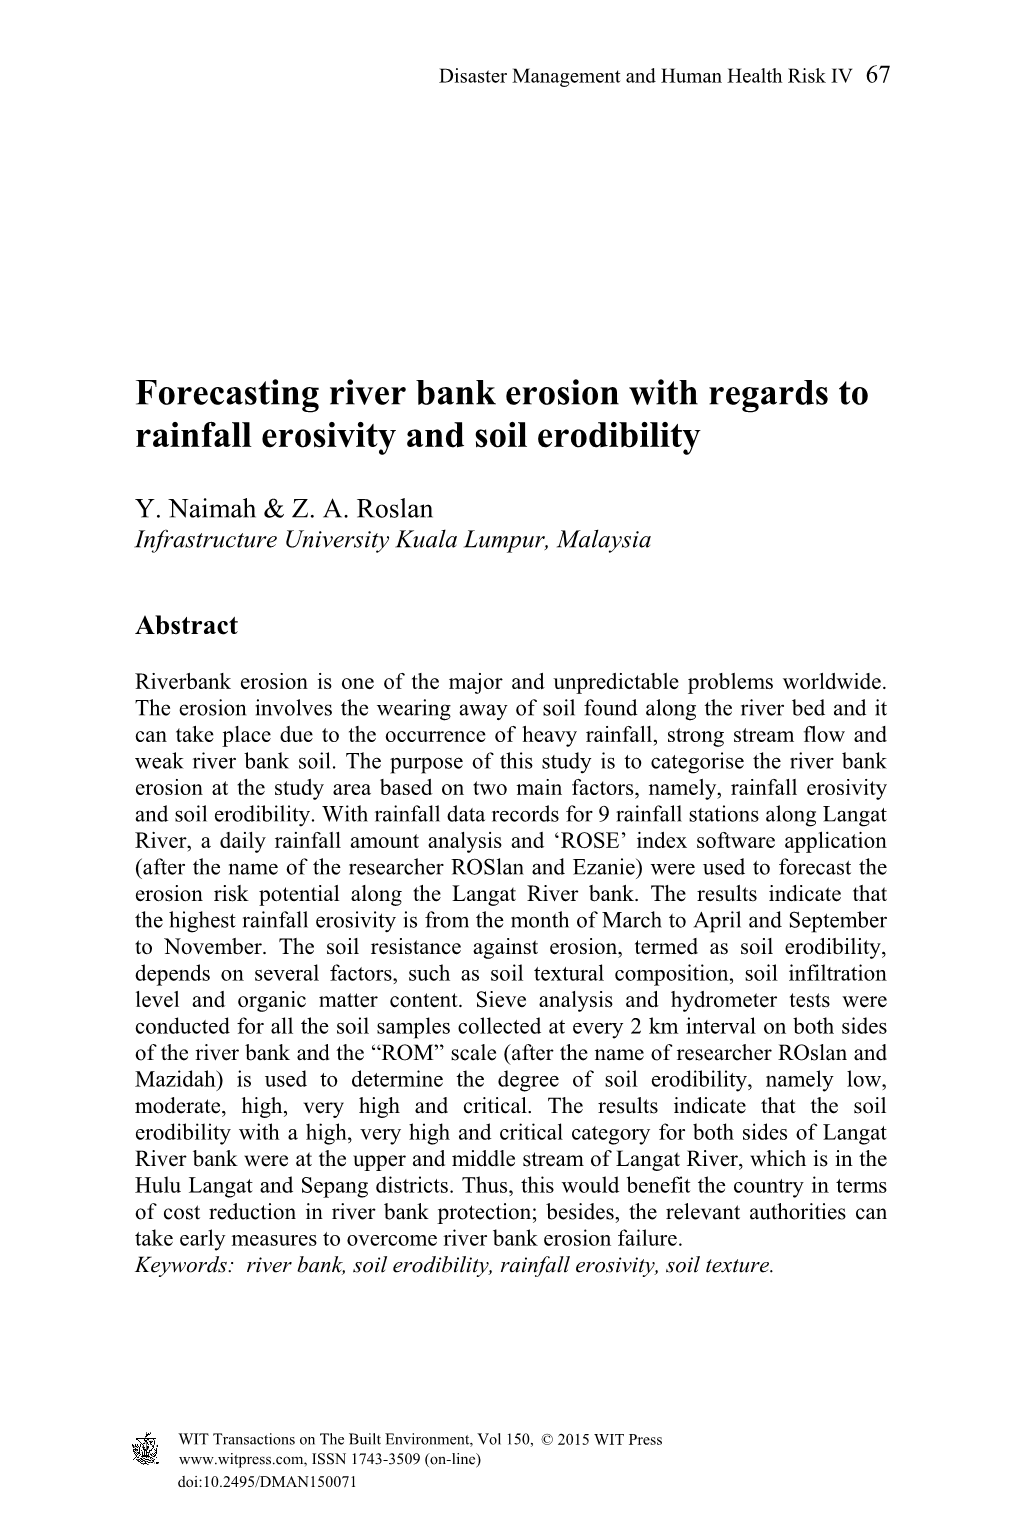 Forecasting River Bank Erosion with Regards to Rainfall Erosivity and Soil Erodibility